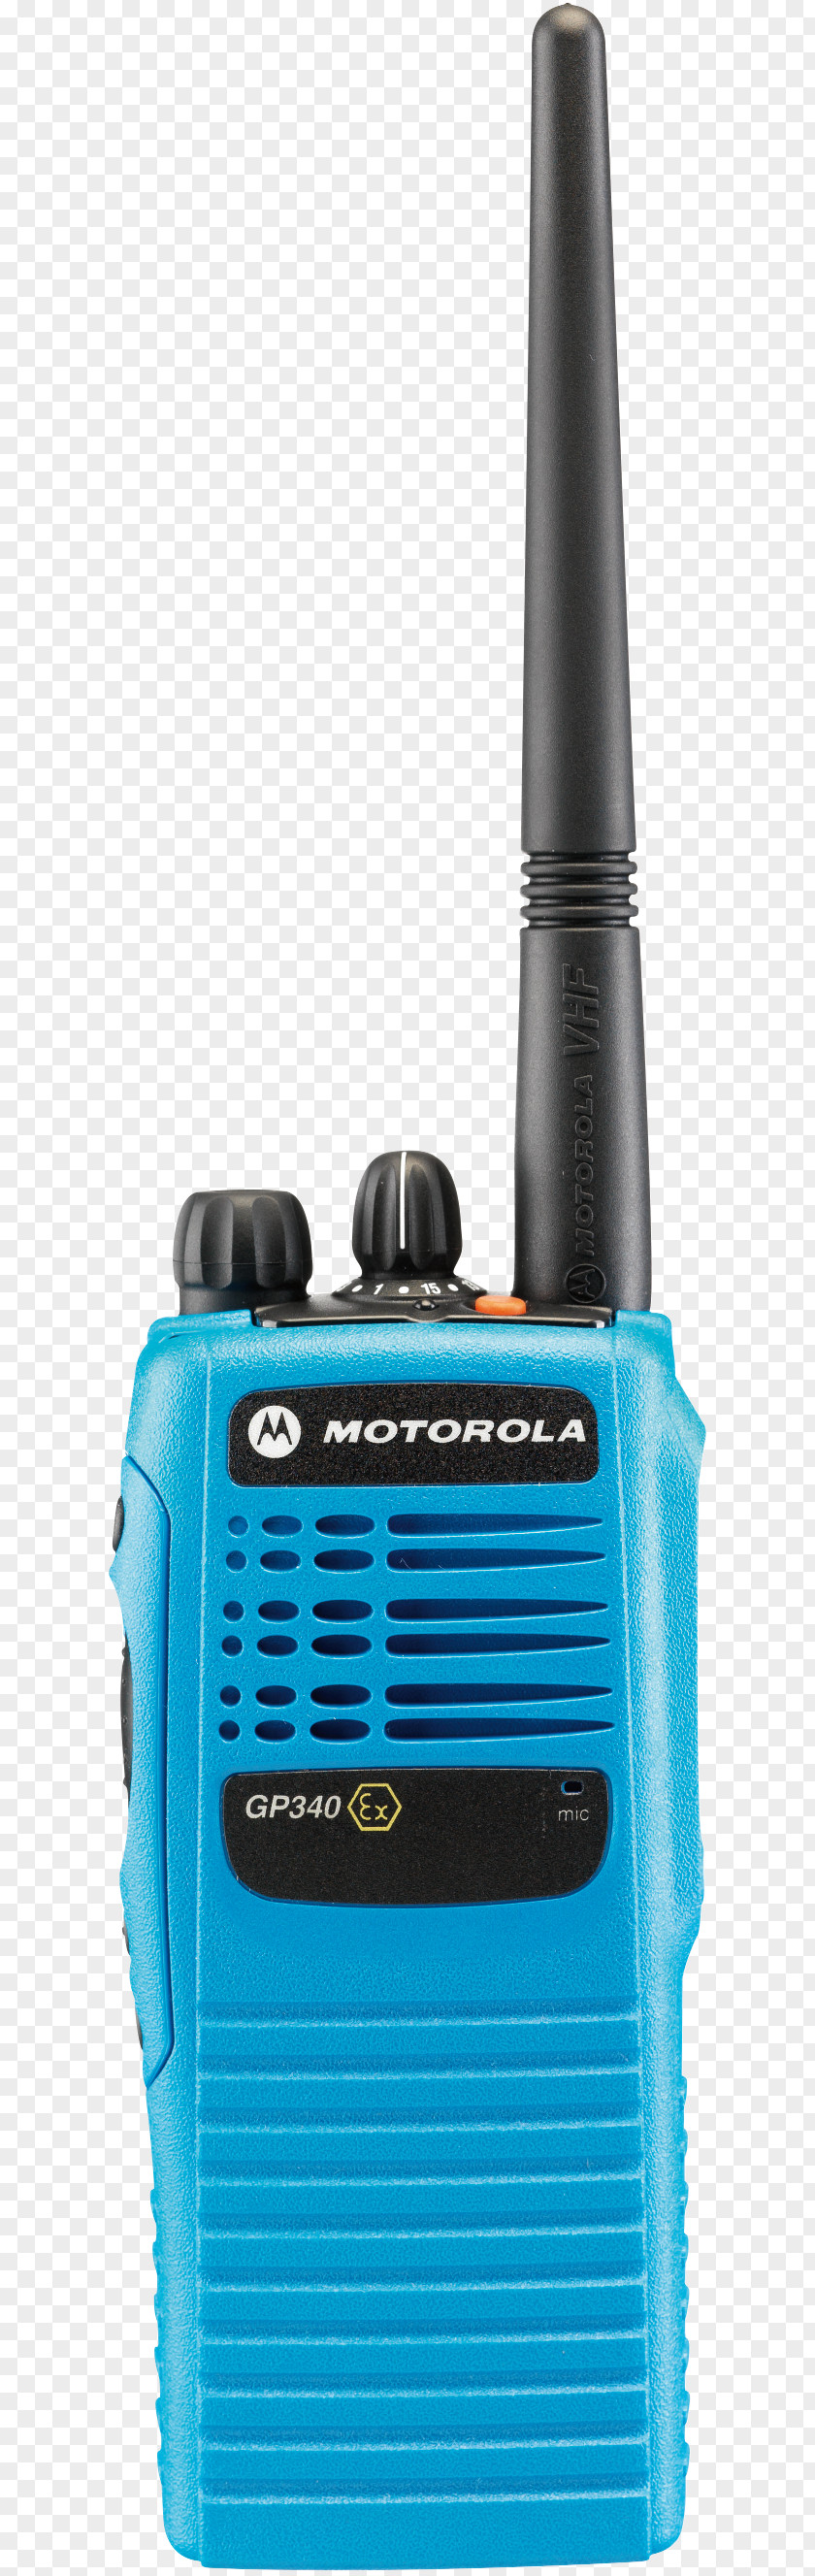 Radio Two-way Walkie-talkie Motorola ATEX Directive PNG